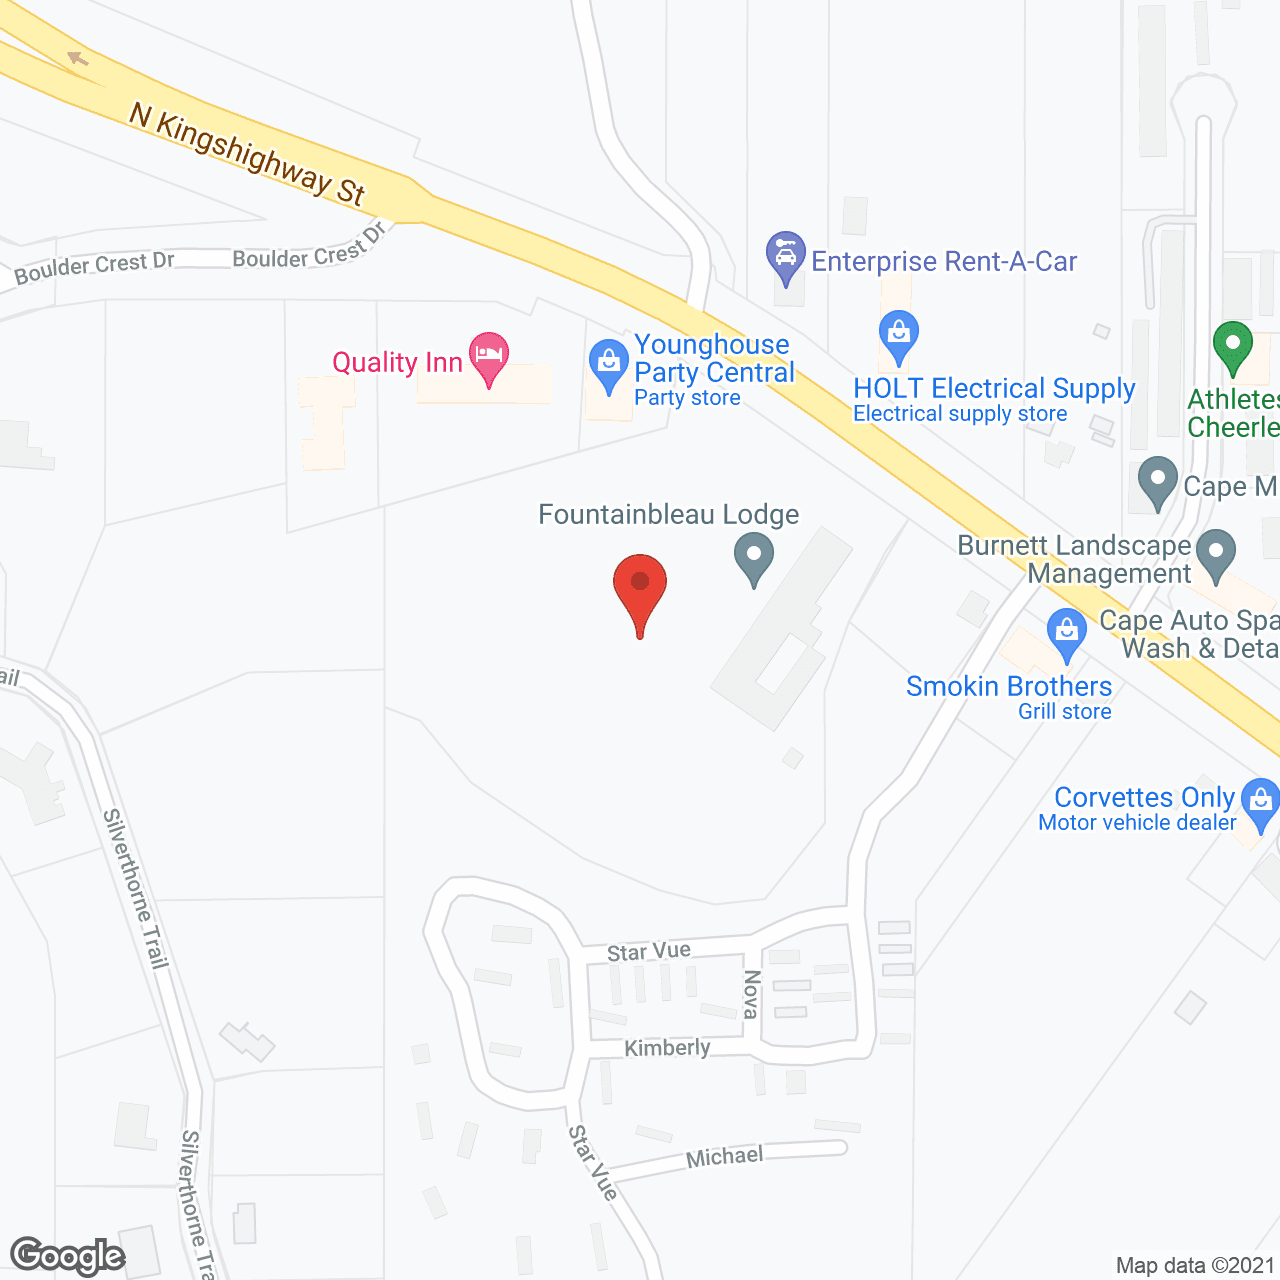 Fountainbleau Lodge in google map